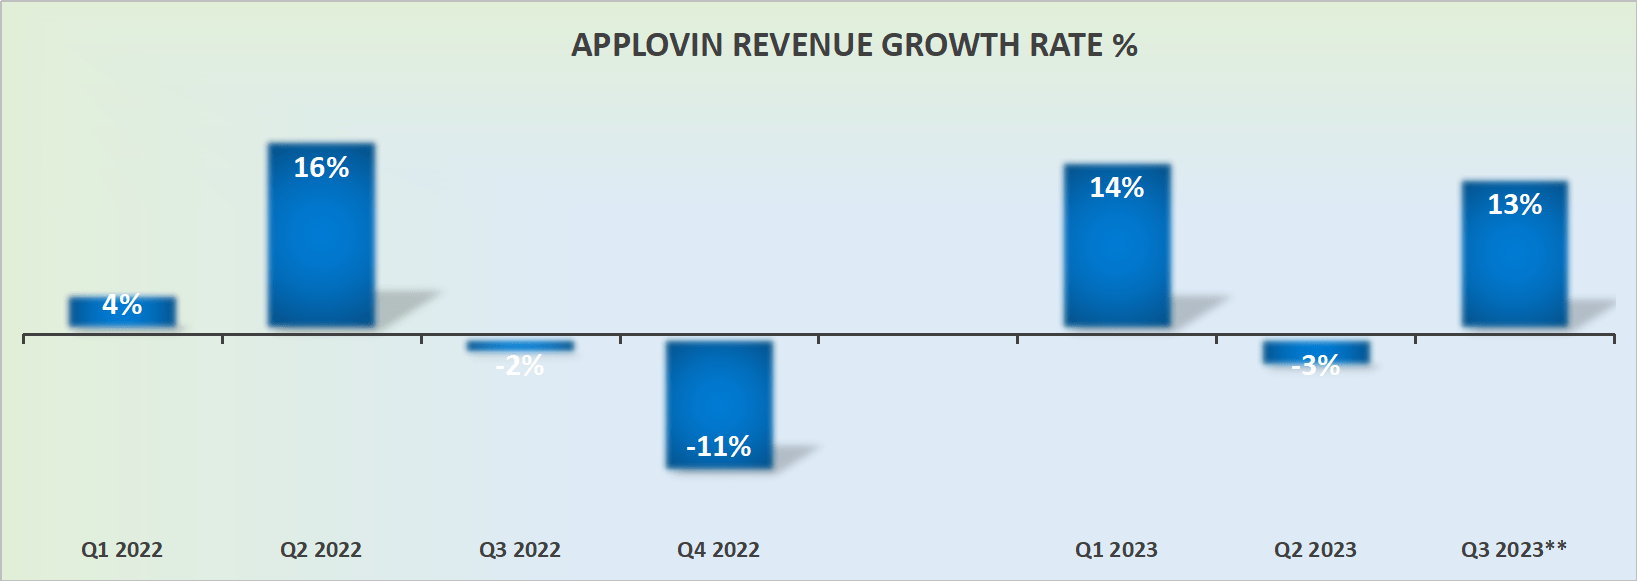 APP revenue growth rates